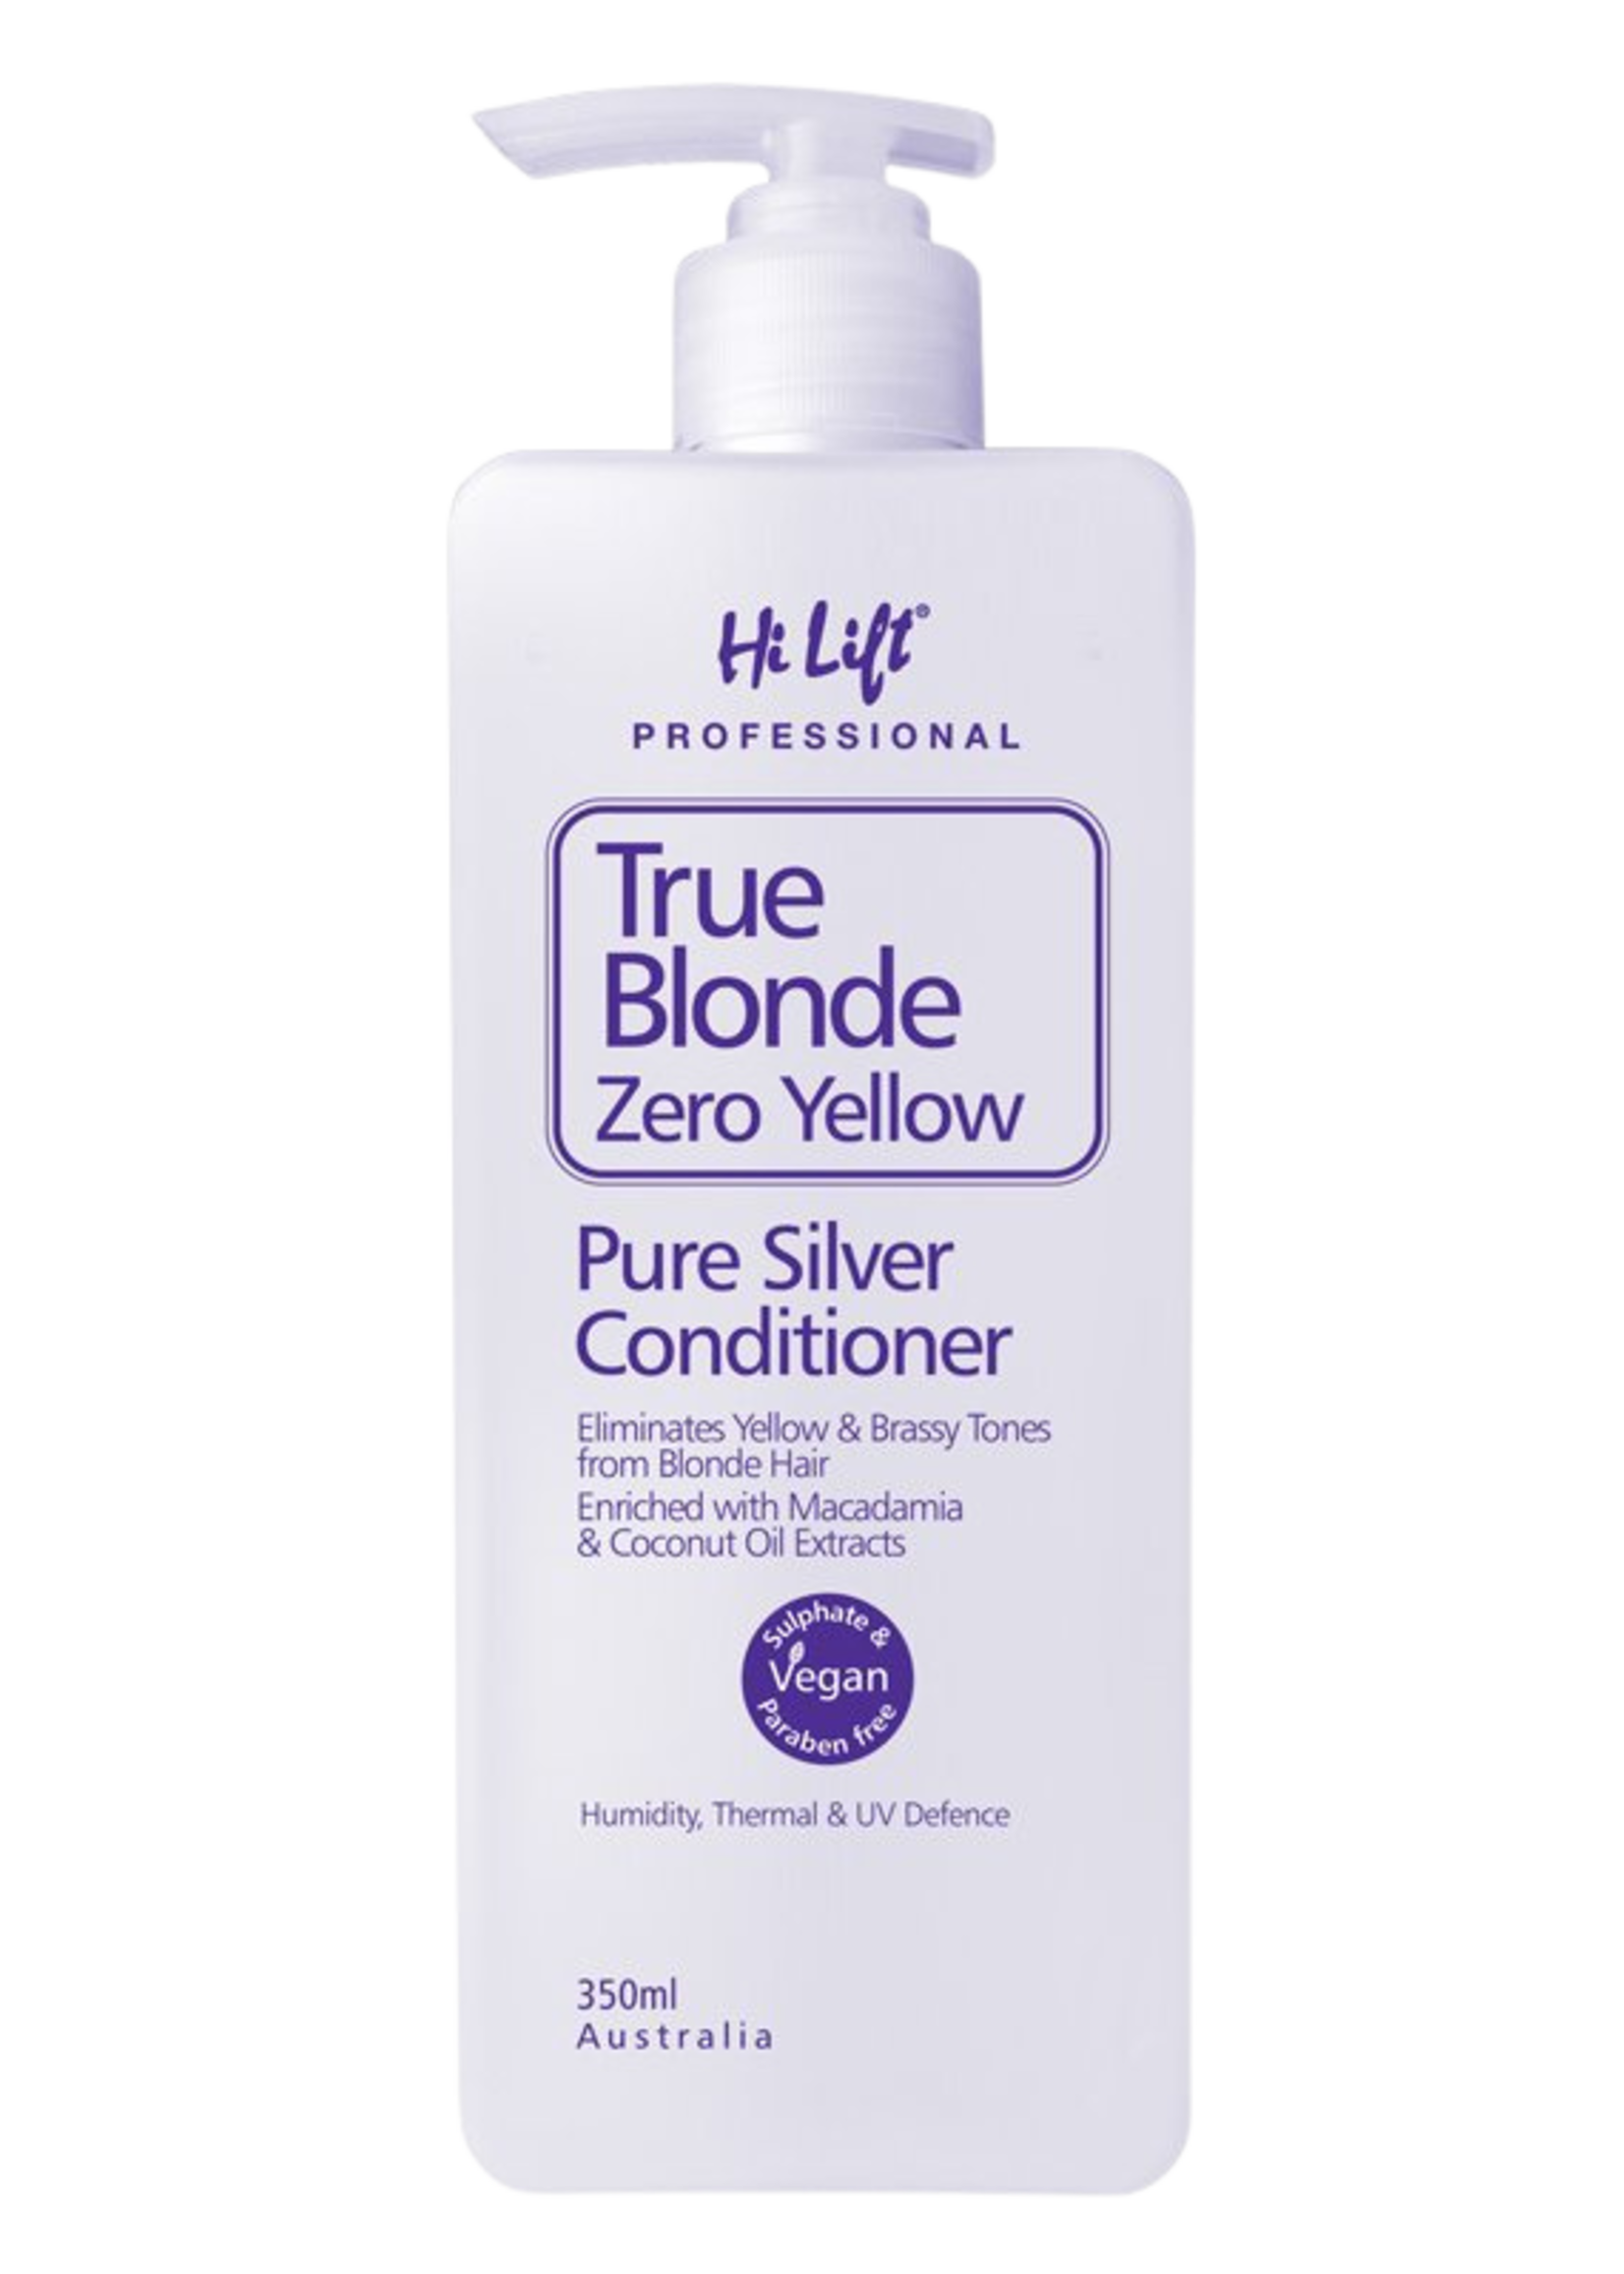 Hi Lift Hi Lift Blonde Zero Yellow Conditioner 350ml